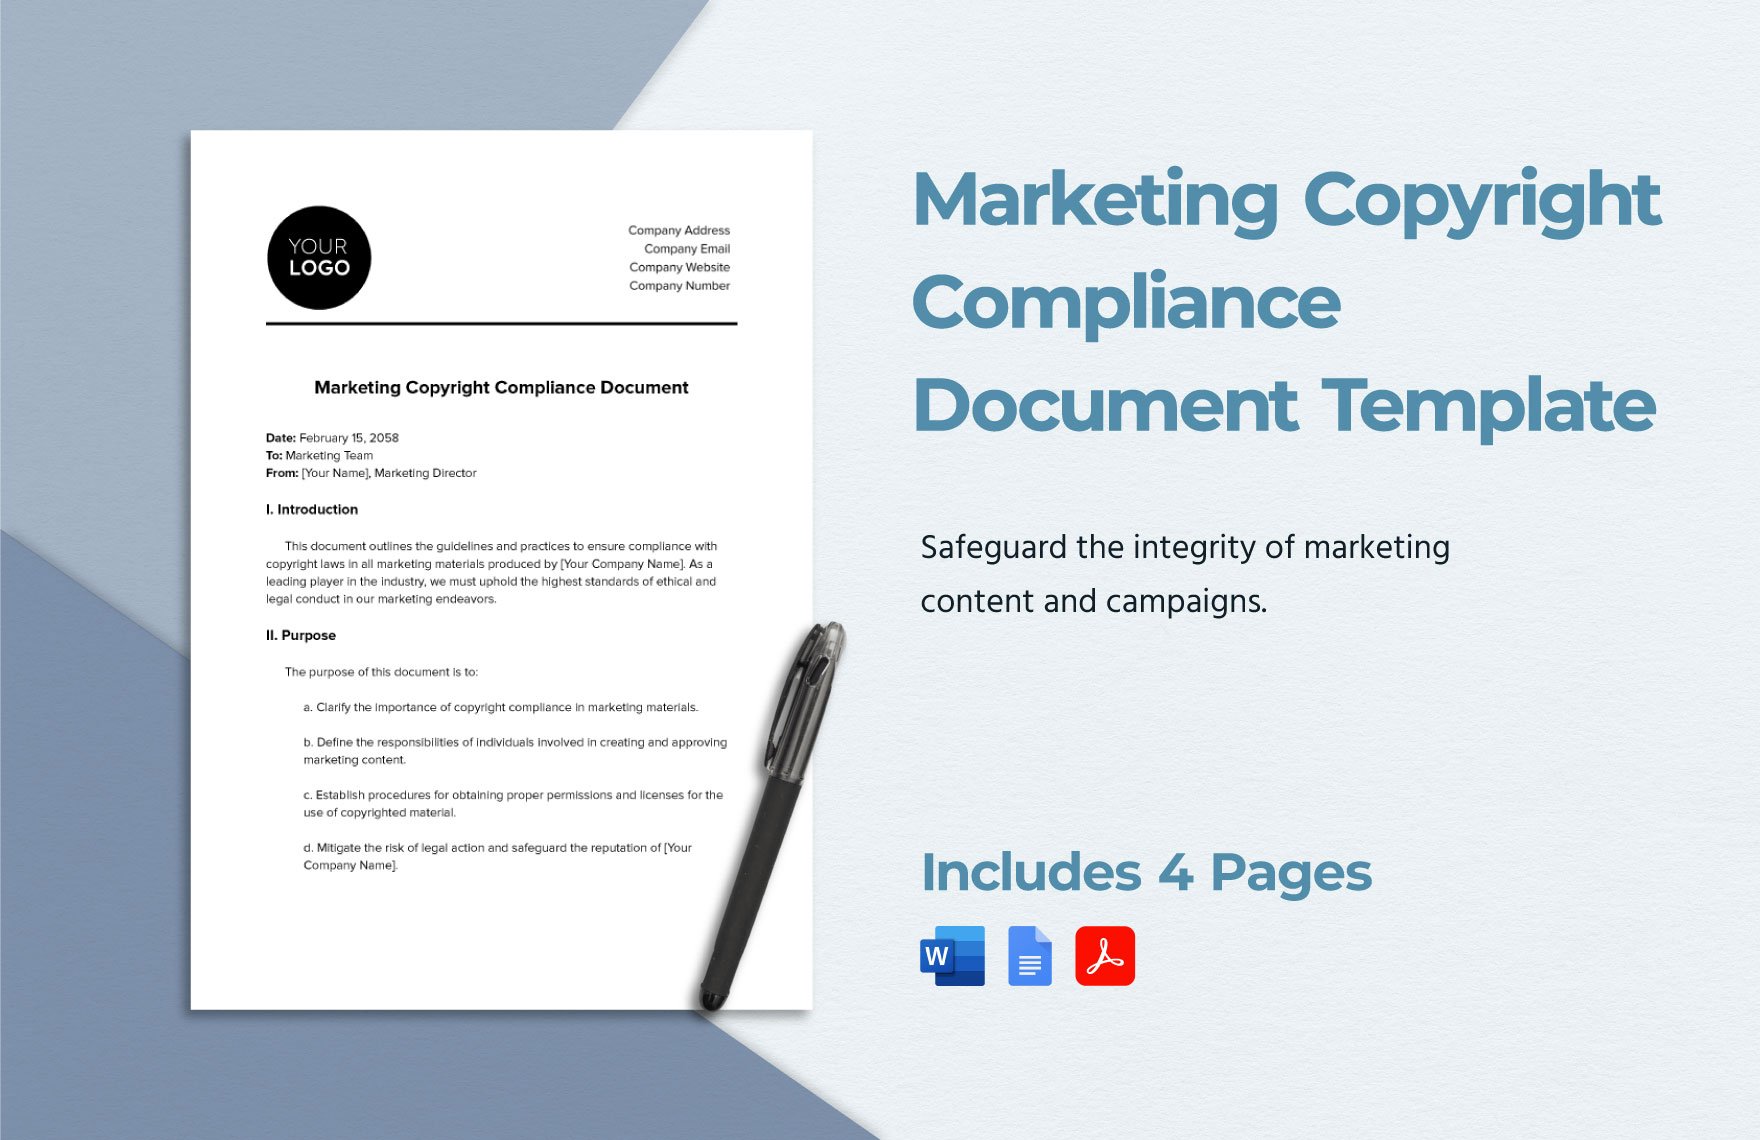 Marketing Copyright Compliance Document Template